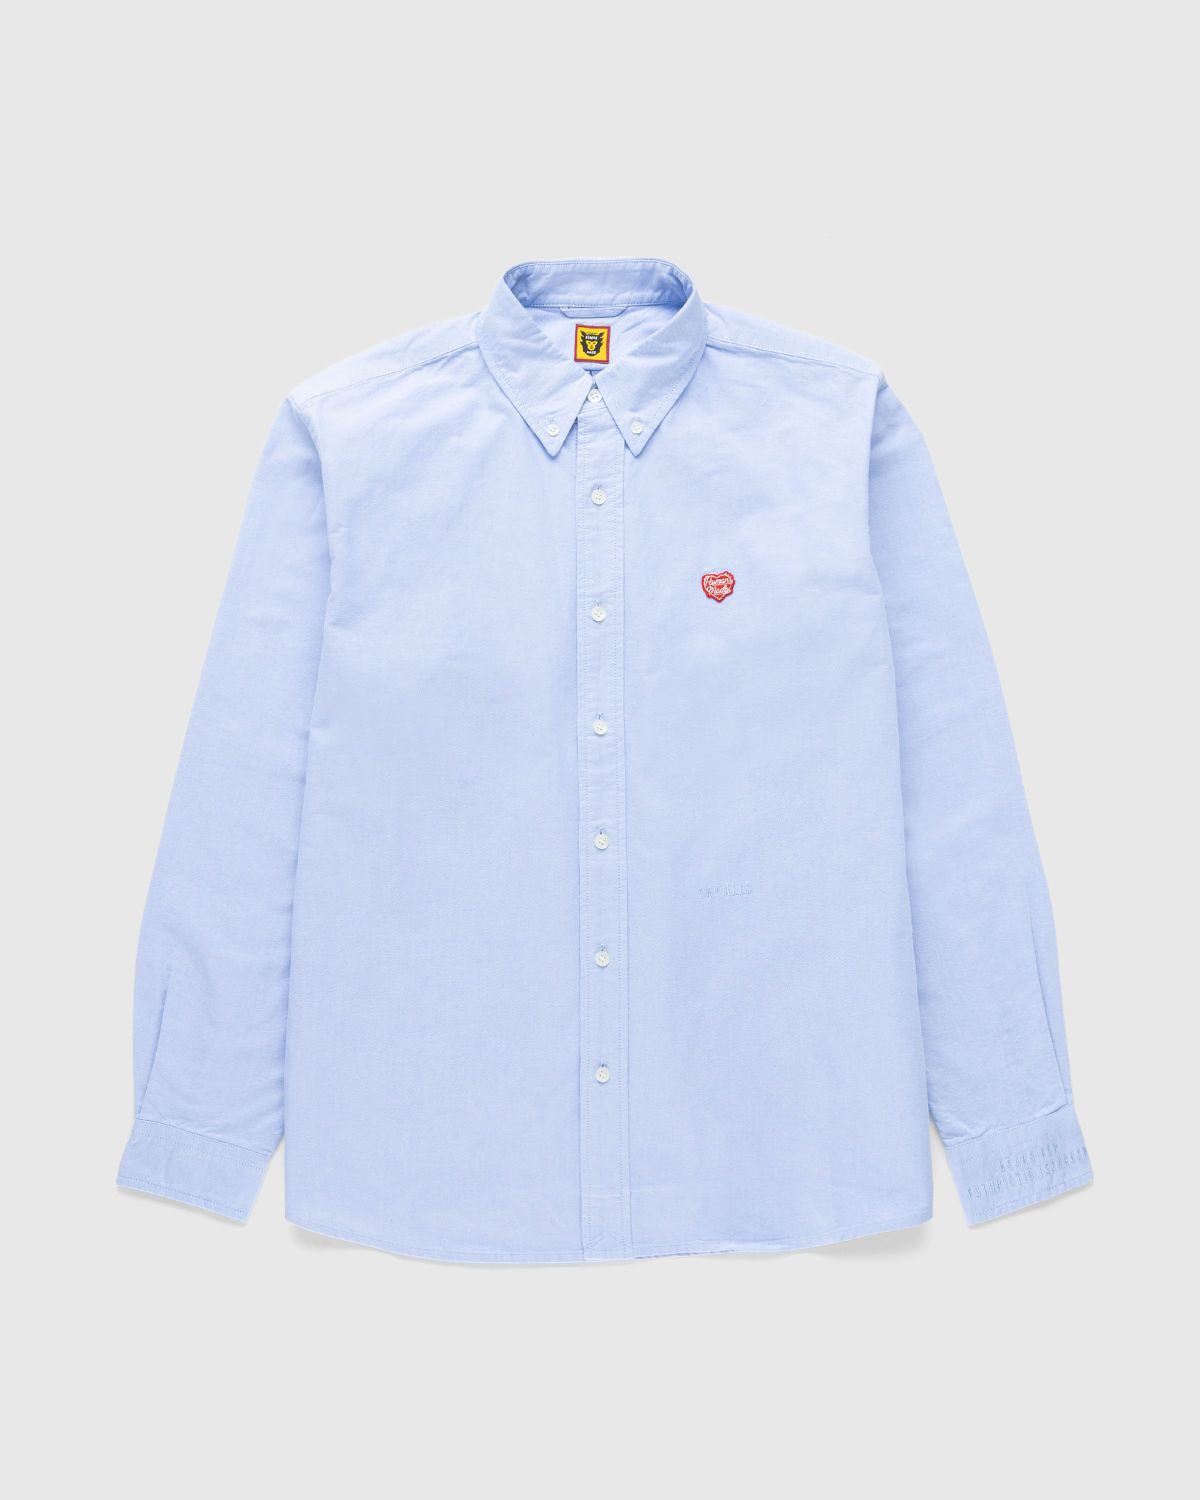 Human Made – Oxford B.D Long-Sleeve Shirt Blue